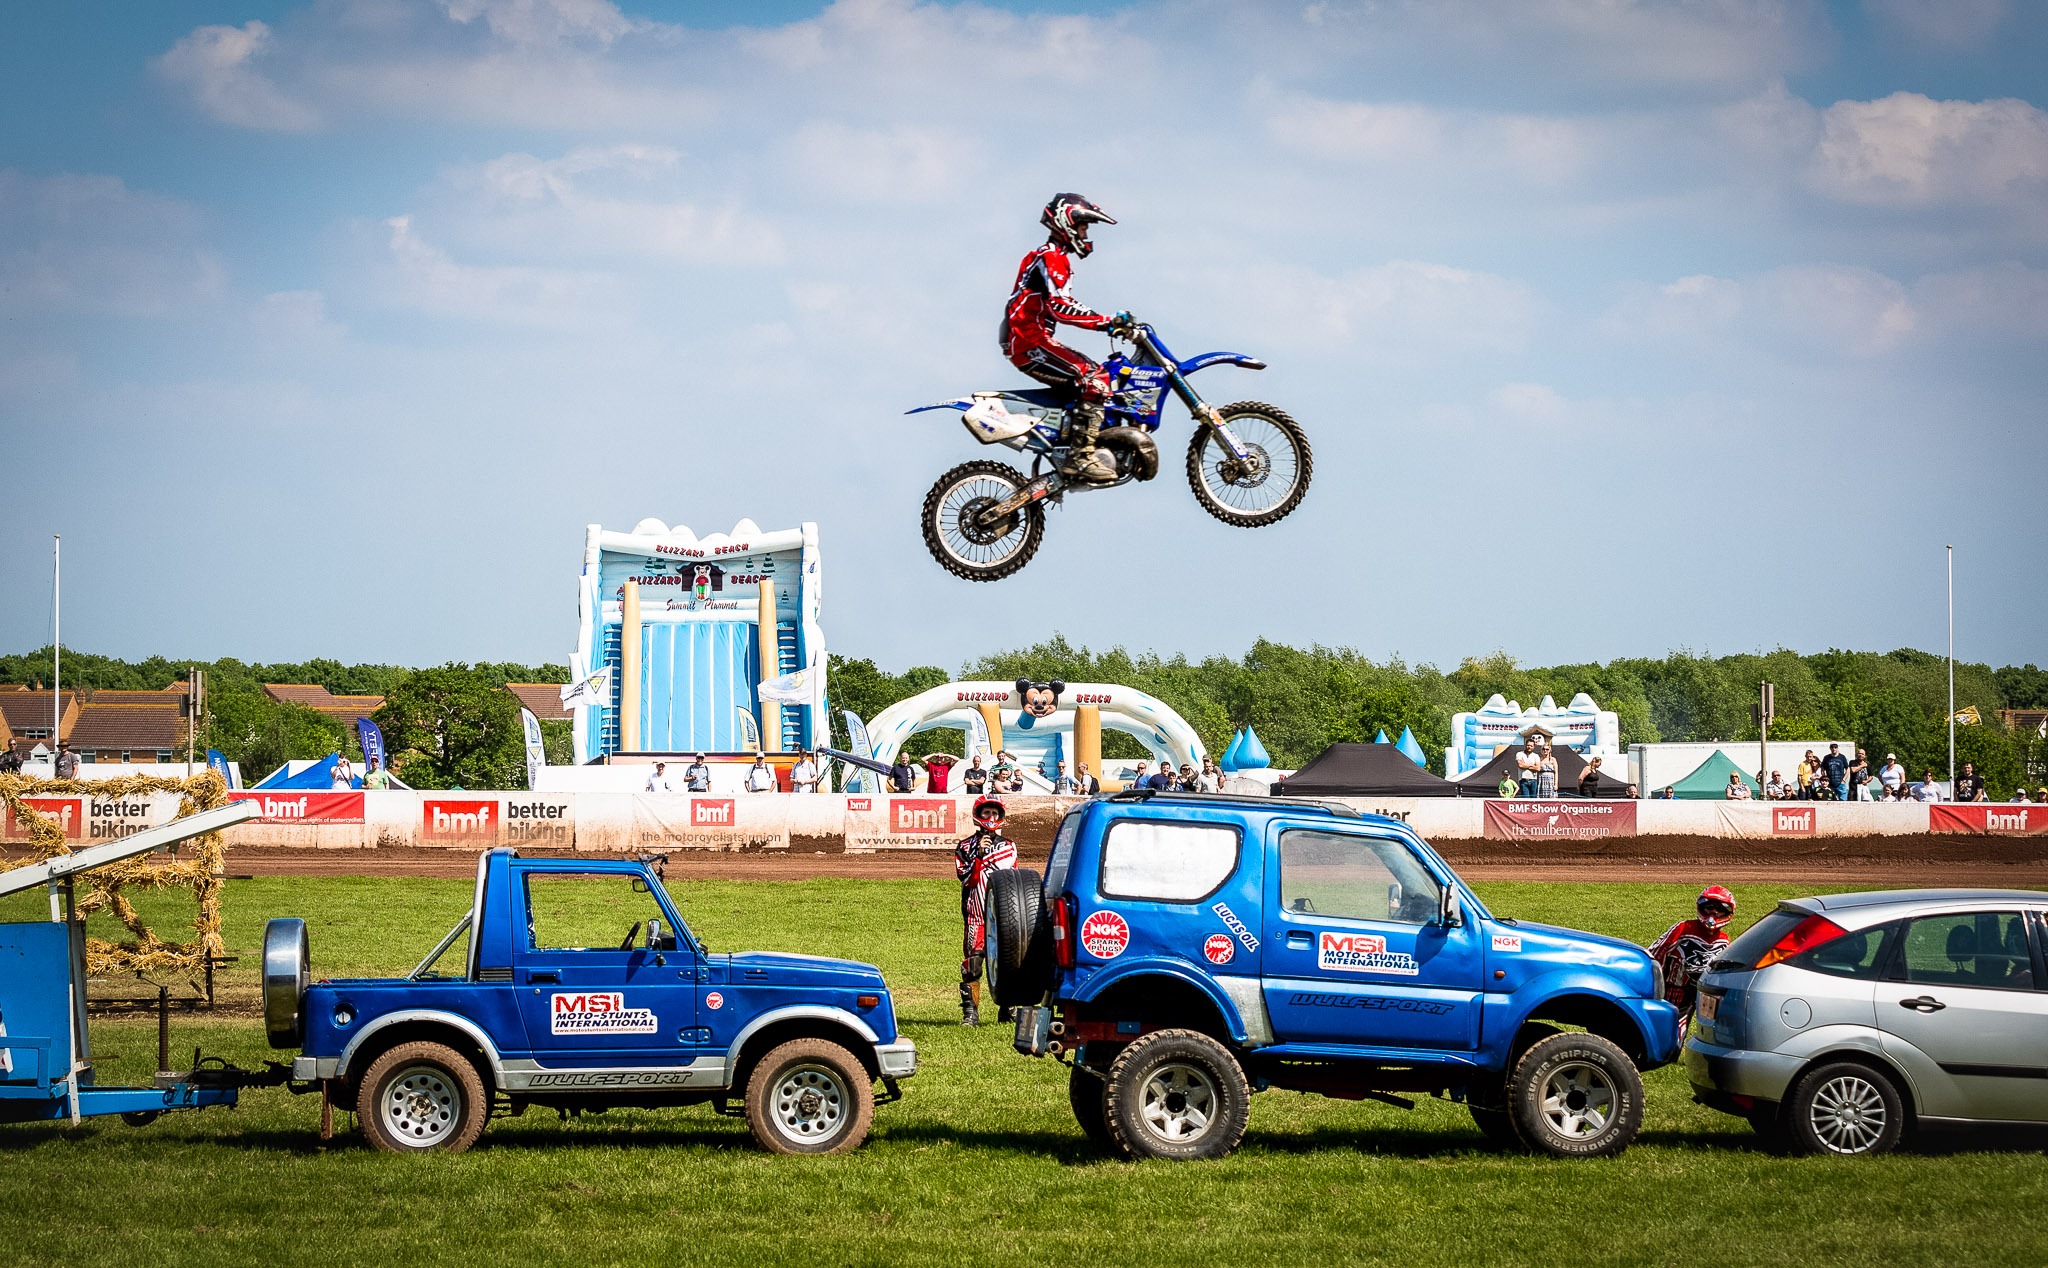 British Motorcycle Federation Stunts